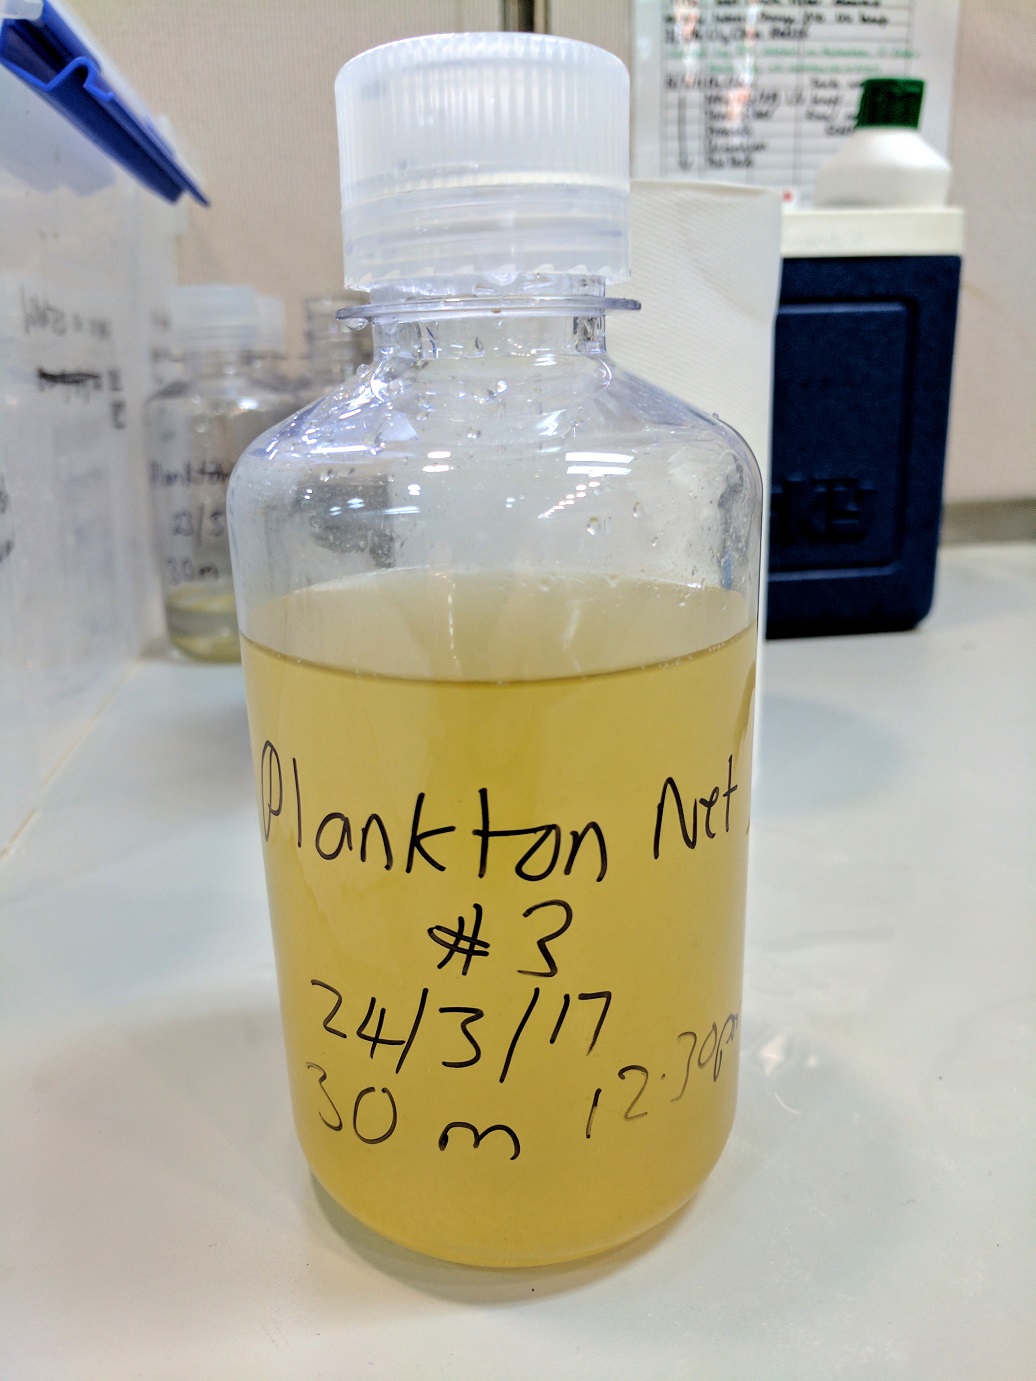 Plankton sample